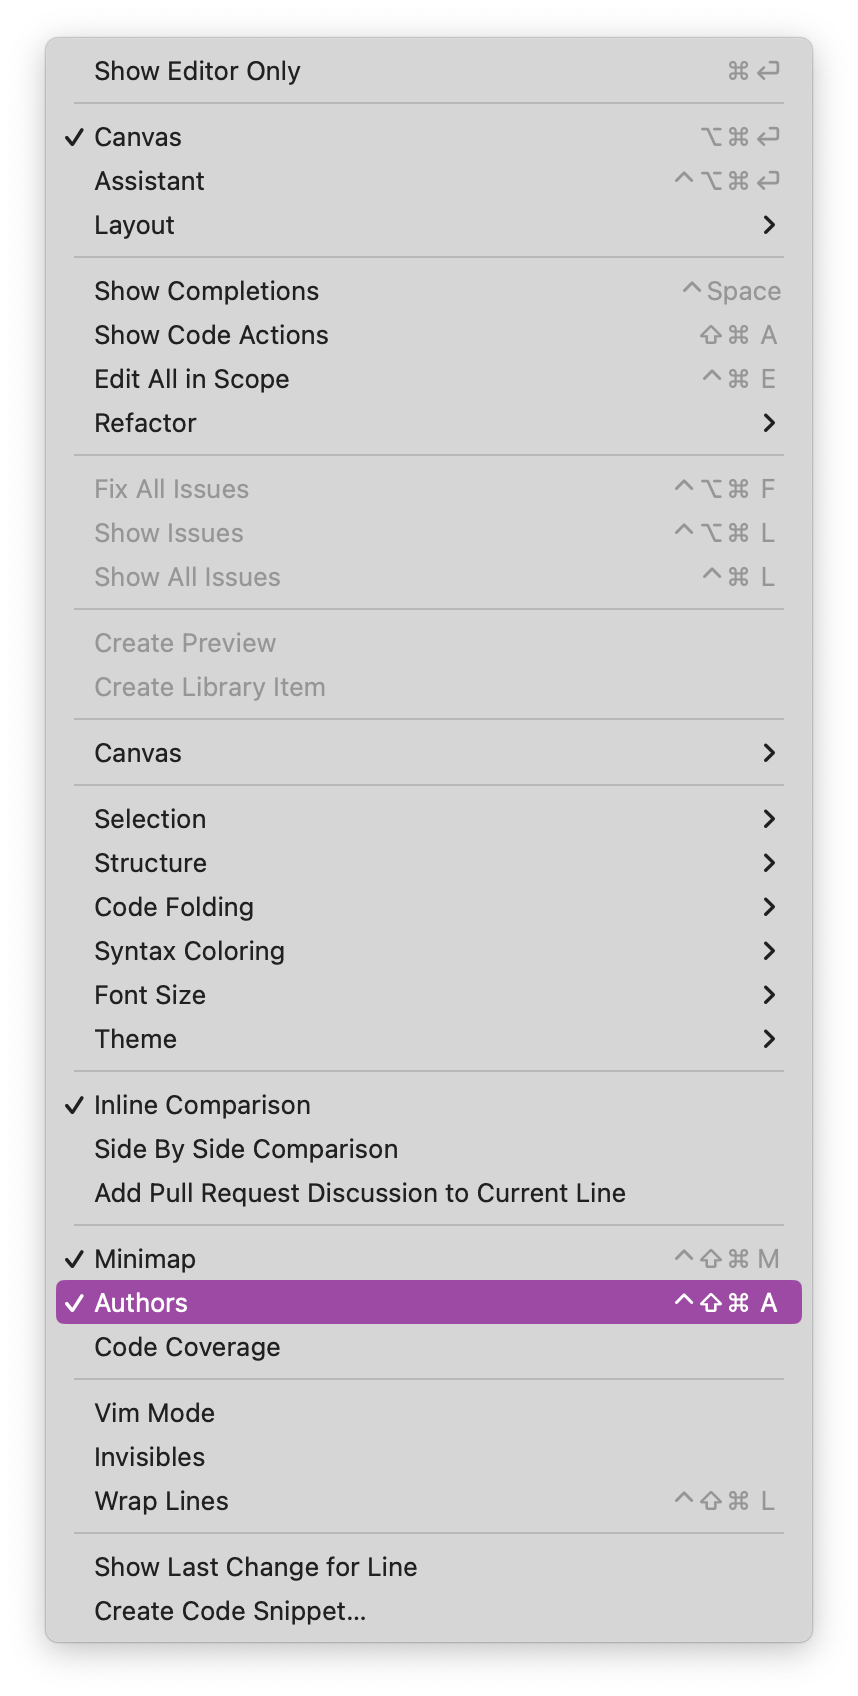 Xcode Editor Menu showing the Authors menu item and shortcut.